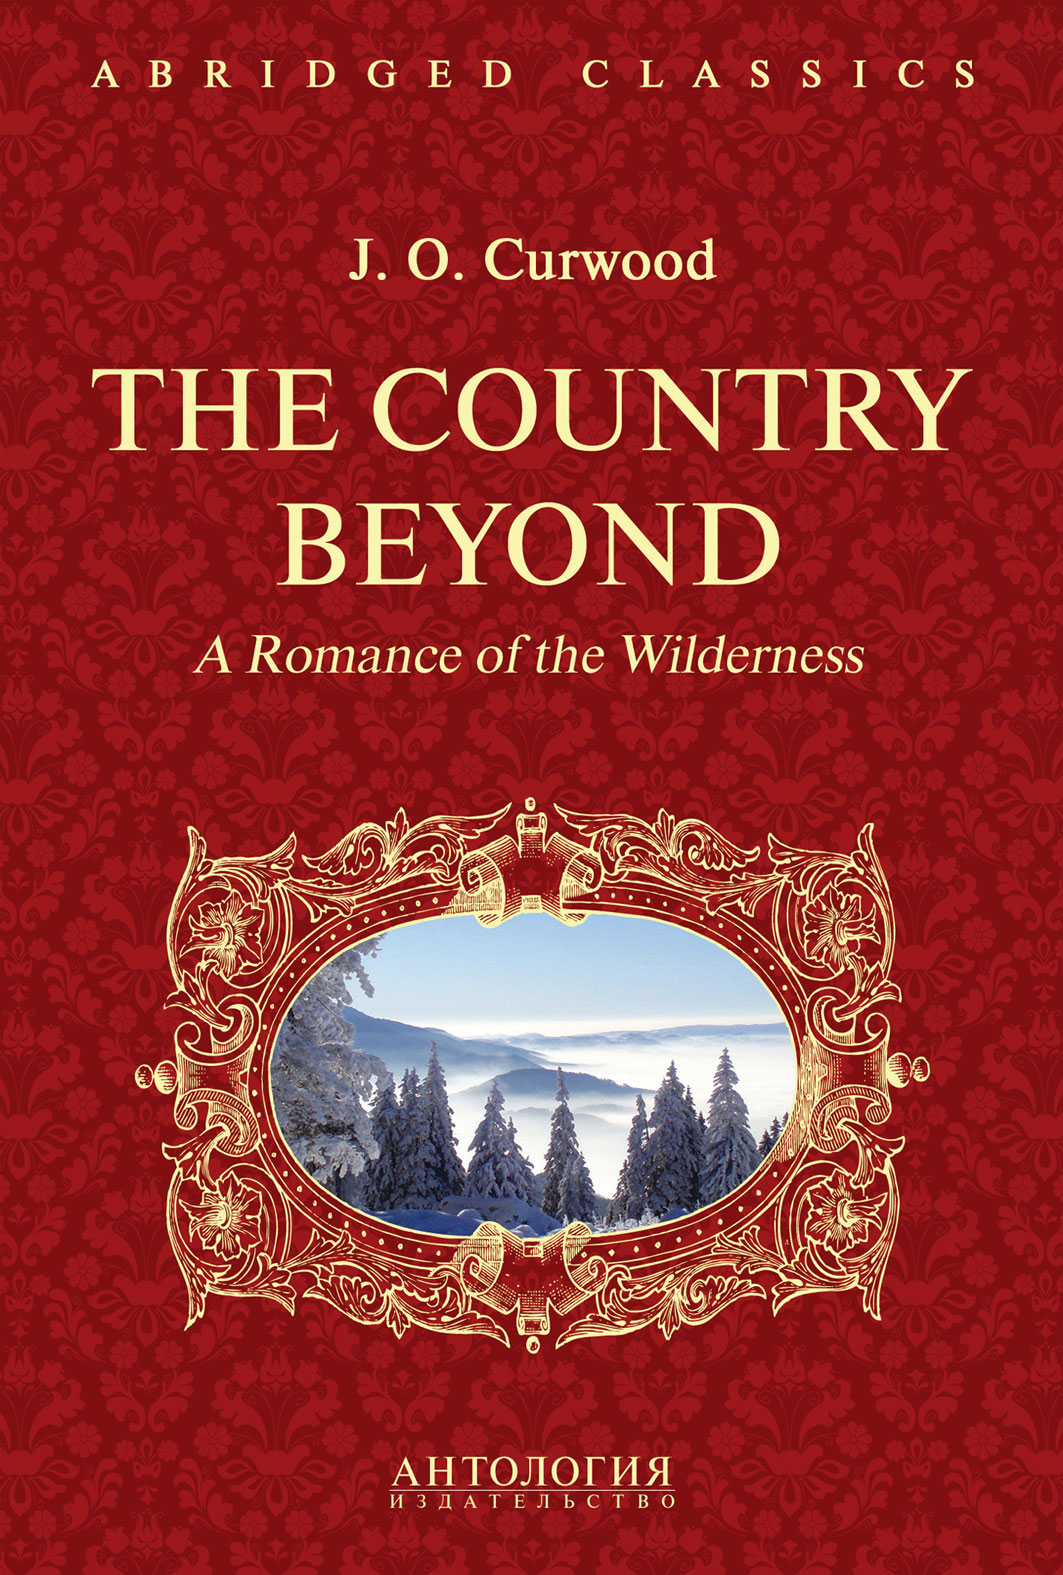 The Country Beyond. A Romance of the Wilderness.В дебрях Севера. Романтическая история сурового края